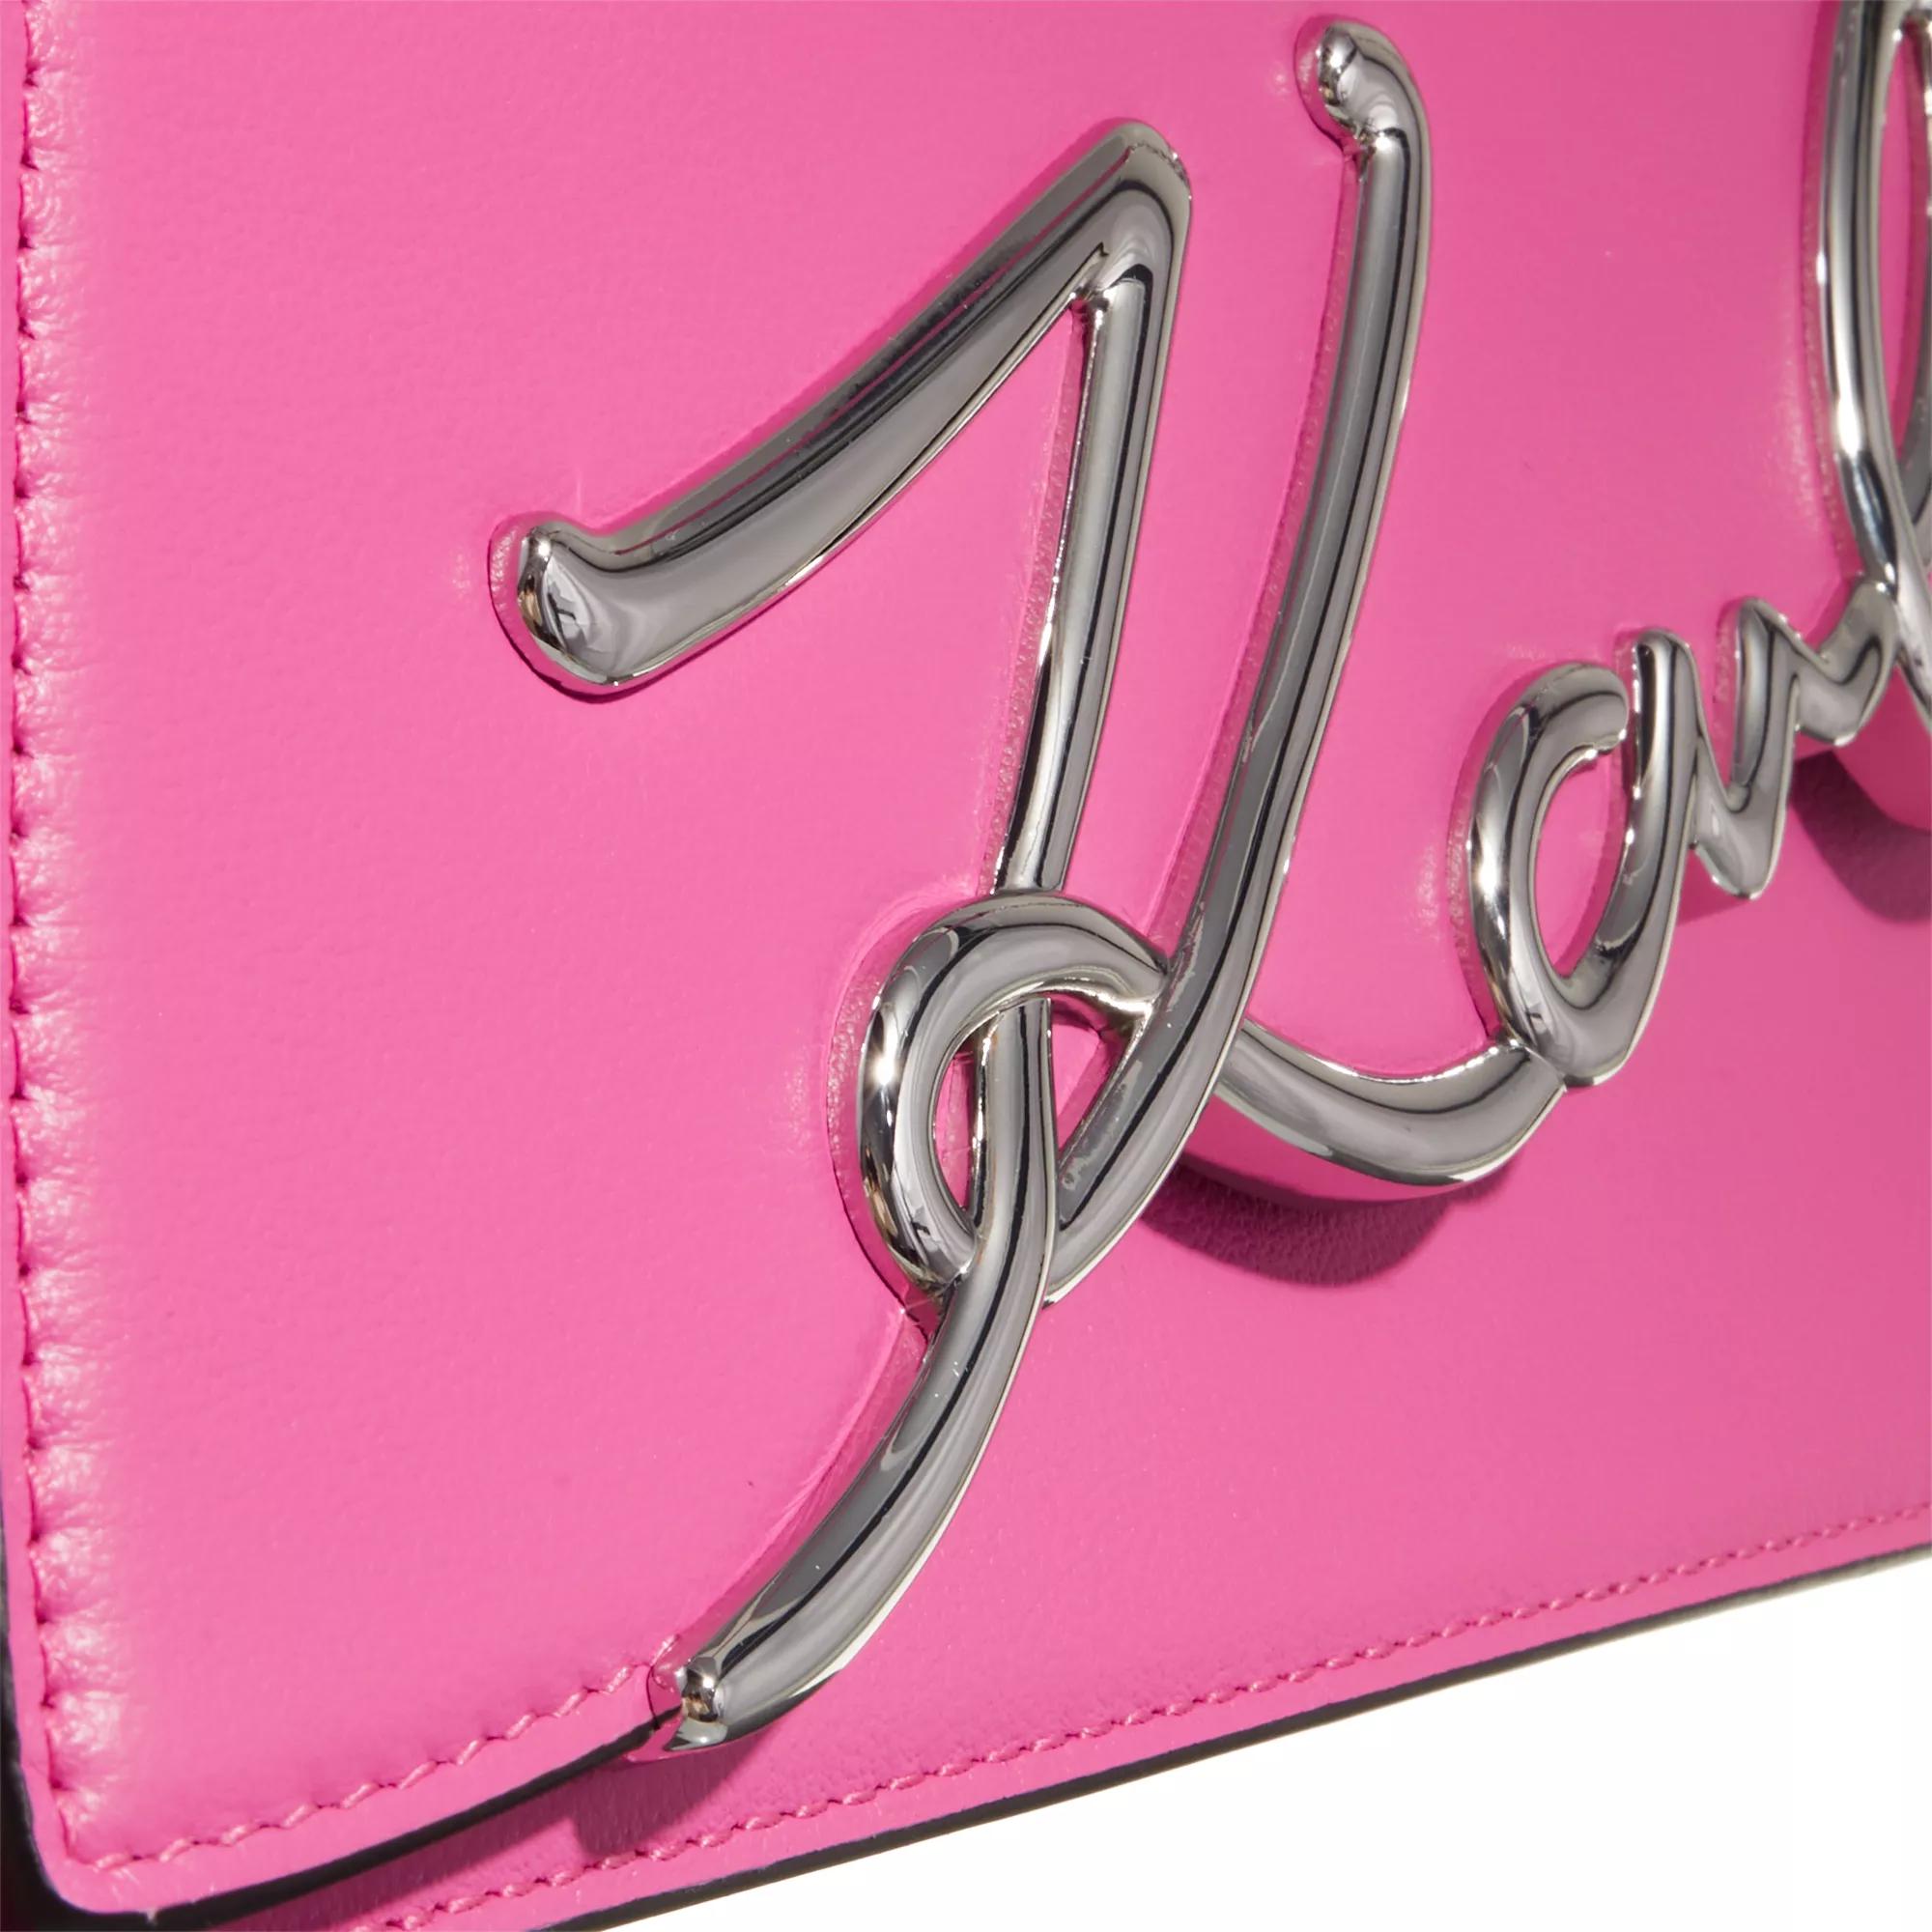 Karl Lagerfeld Crossbody bags K Signature 2.0 Shoulderbag in roze